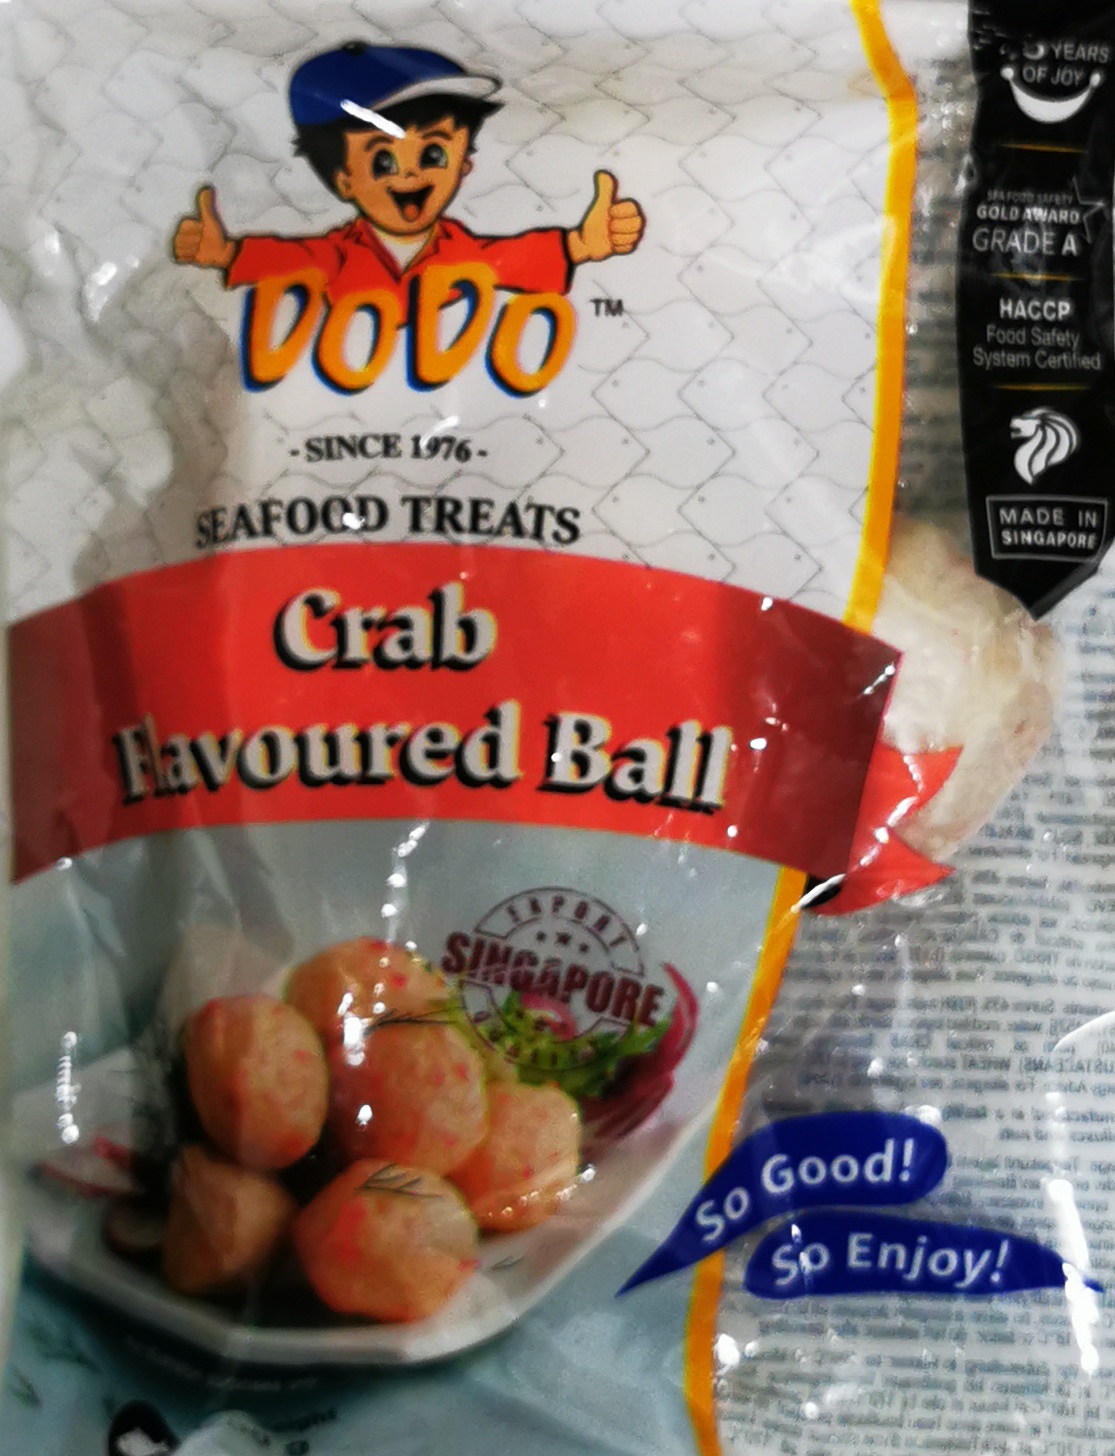 Dodo Crab Flavoured Ball 200g